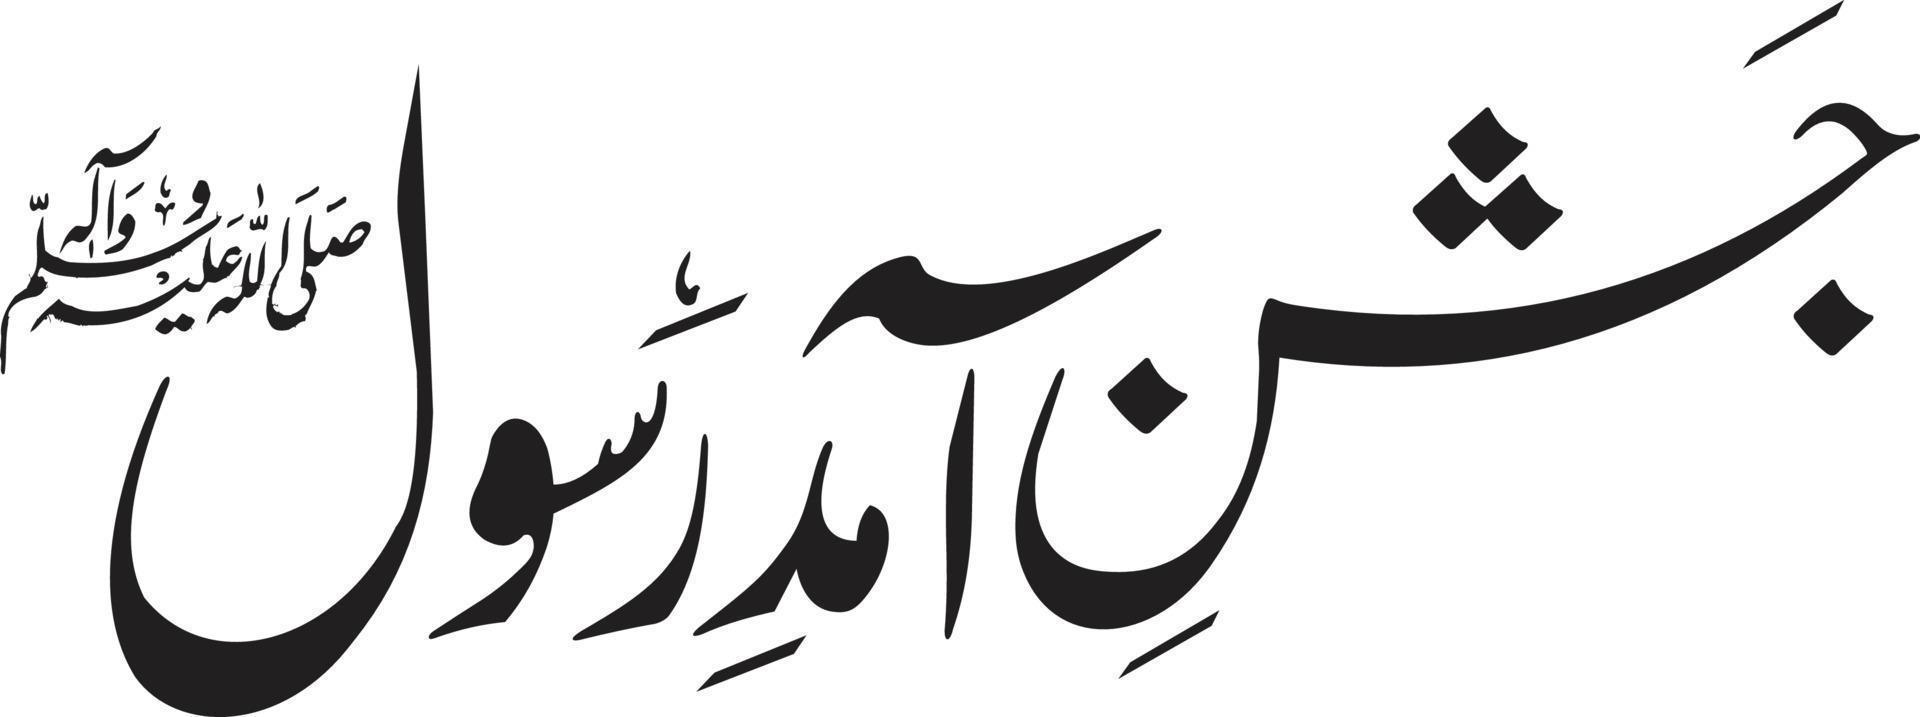 jashan amad rasool titel islamic kalligrafi fri vektor